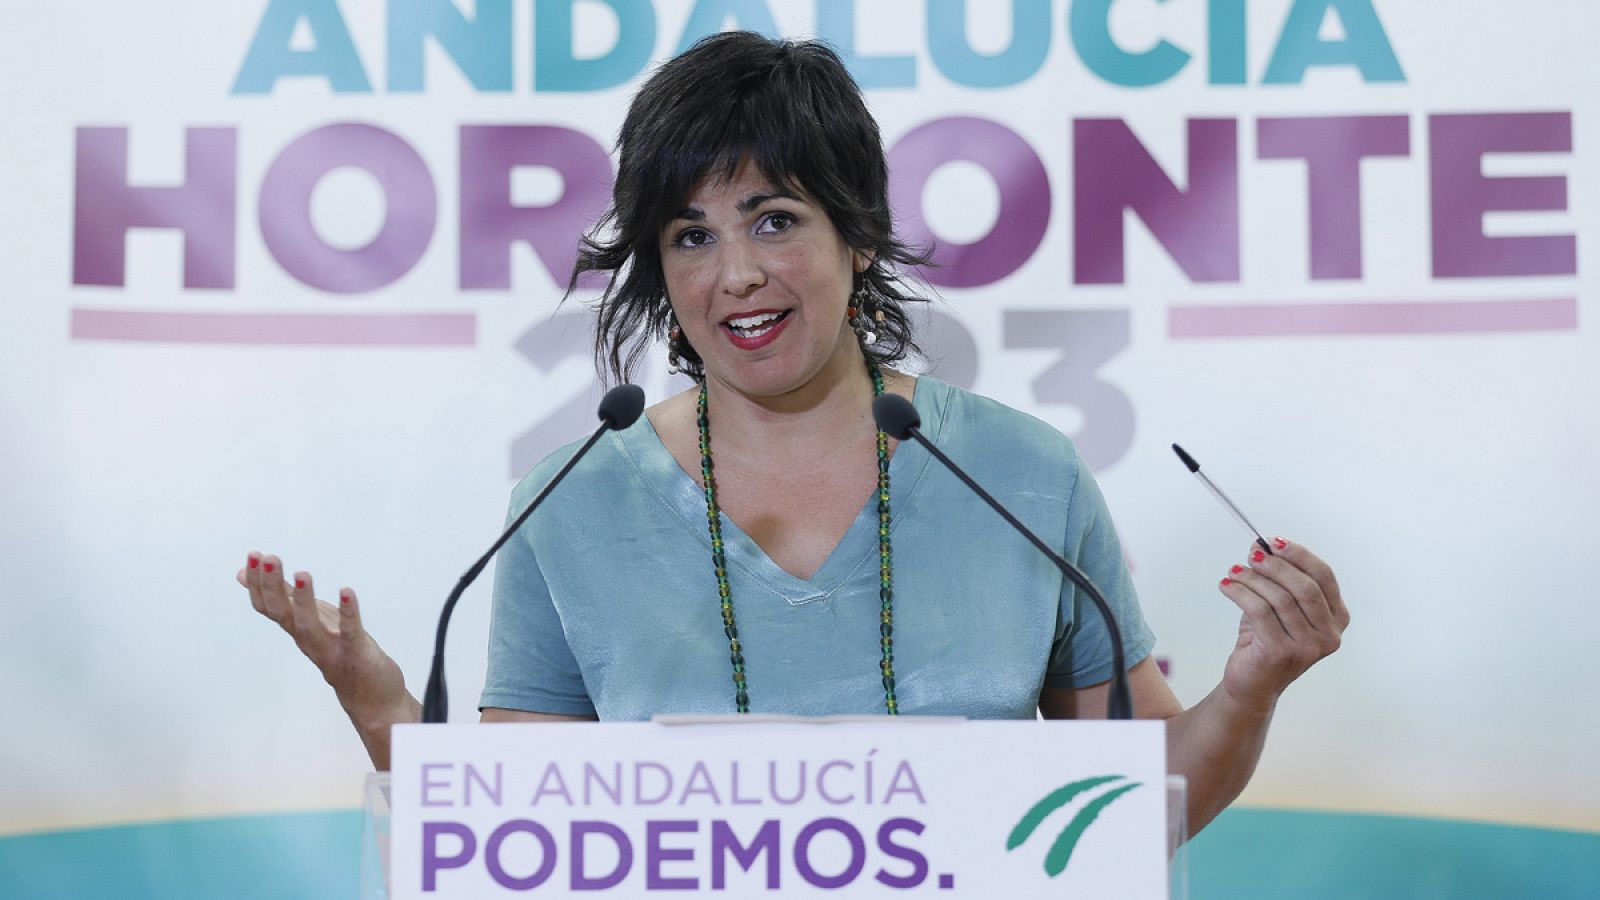 La coordinadora de Podemos Andalucía y presidenta del grupo parlamentario Adelante Andalucía, Teresa Rodríguez